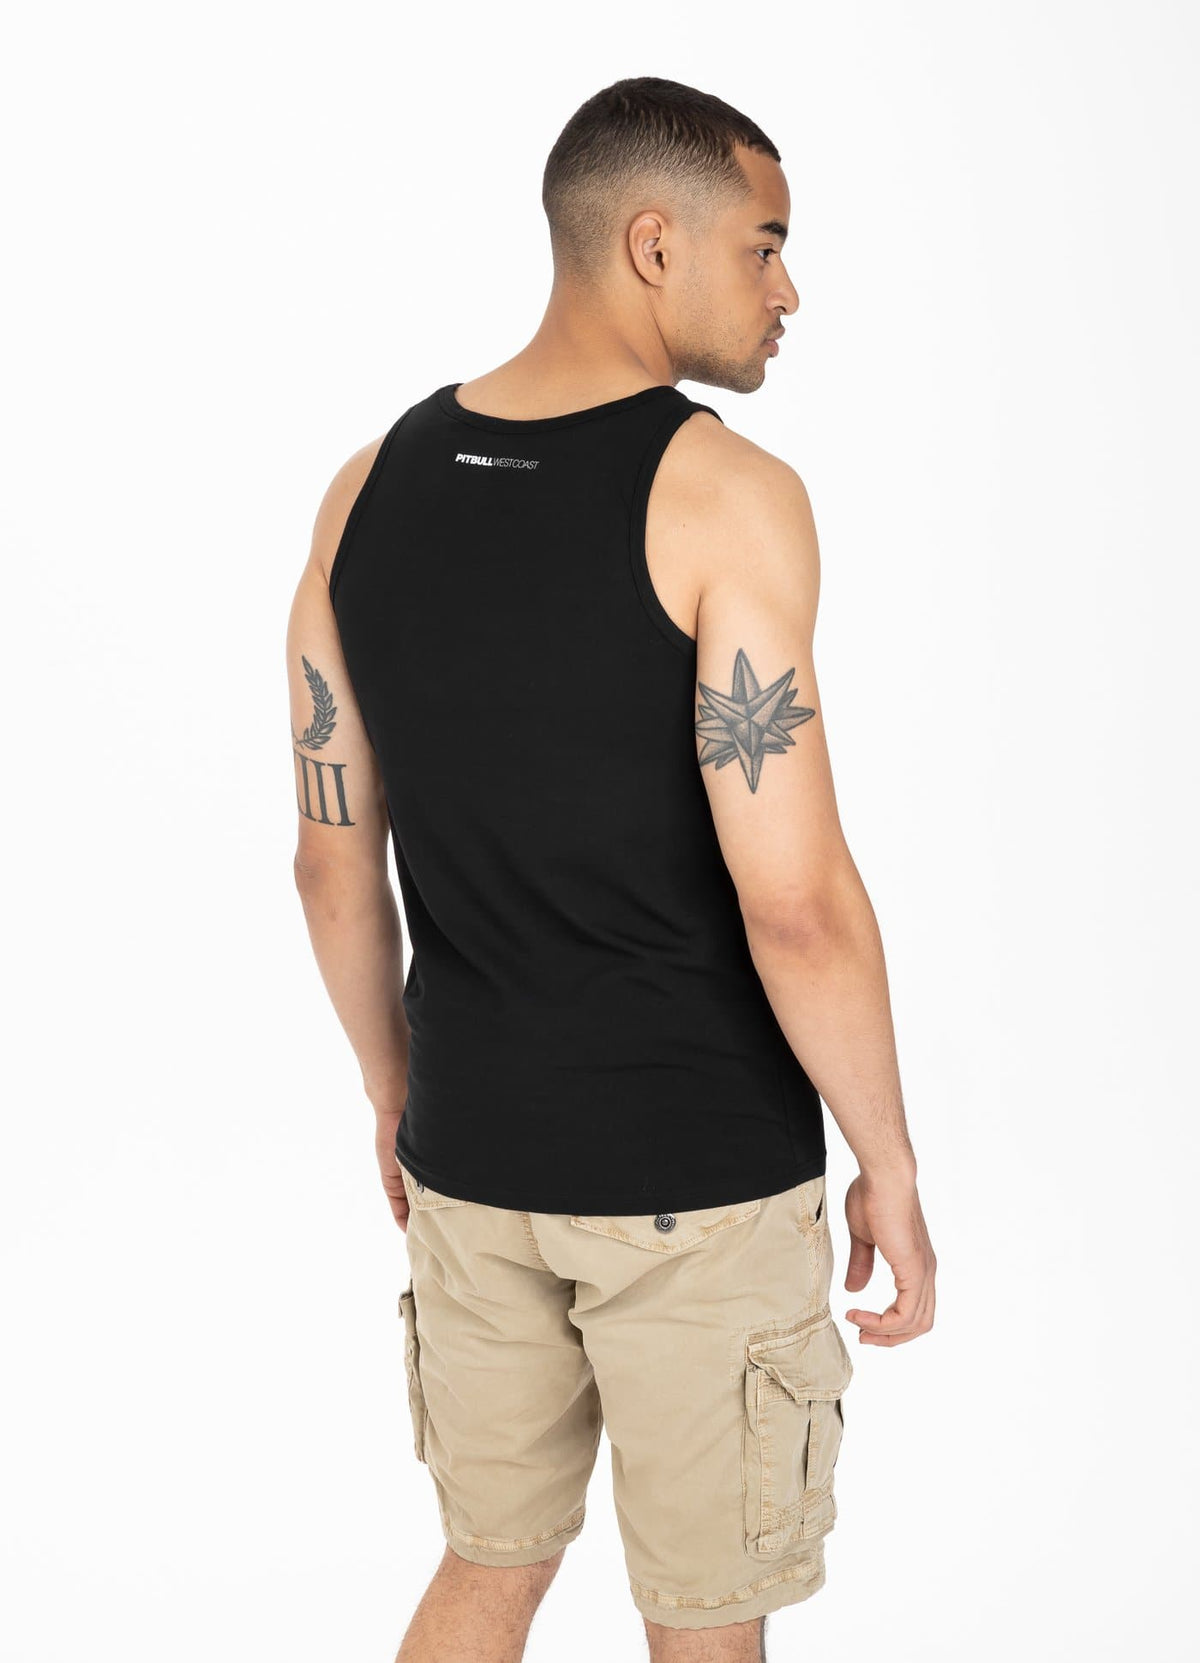 Tank Top Slim Fit Small Logo Black - Pitbull West Coast International Store 